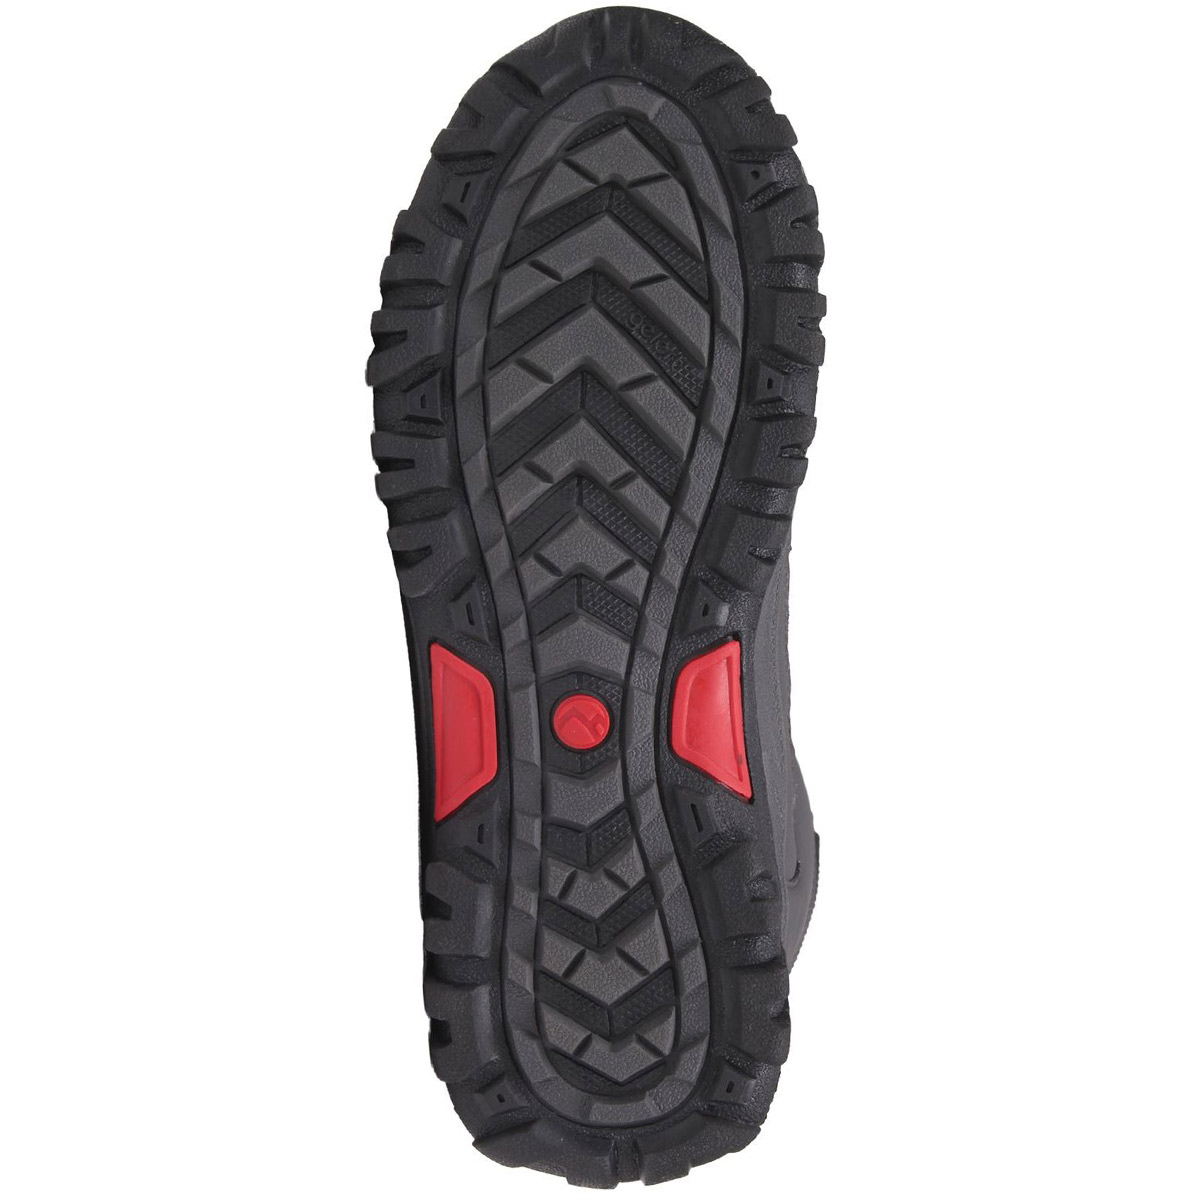 Horizon Waterproof Mid Hiking Boots | eBay